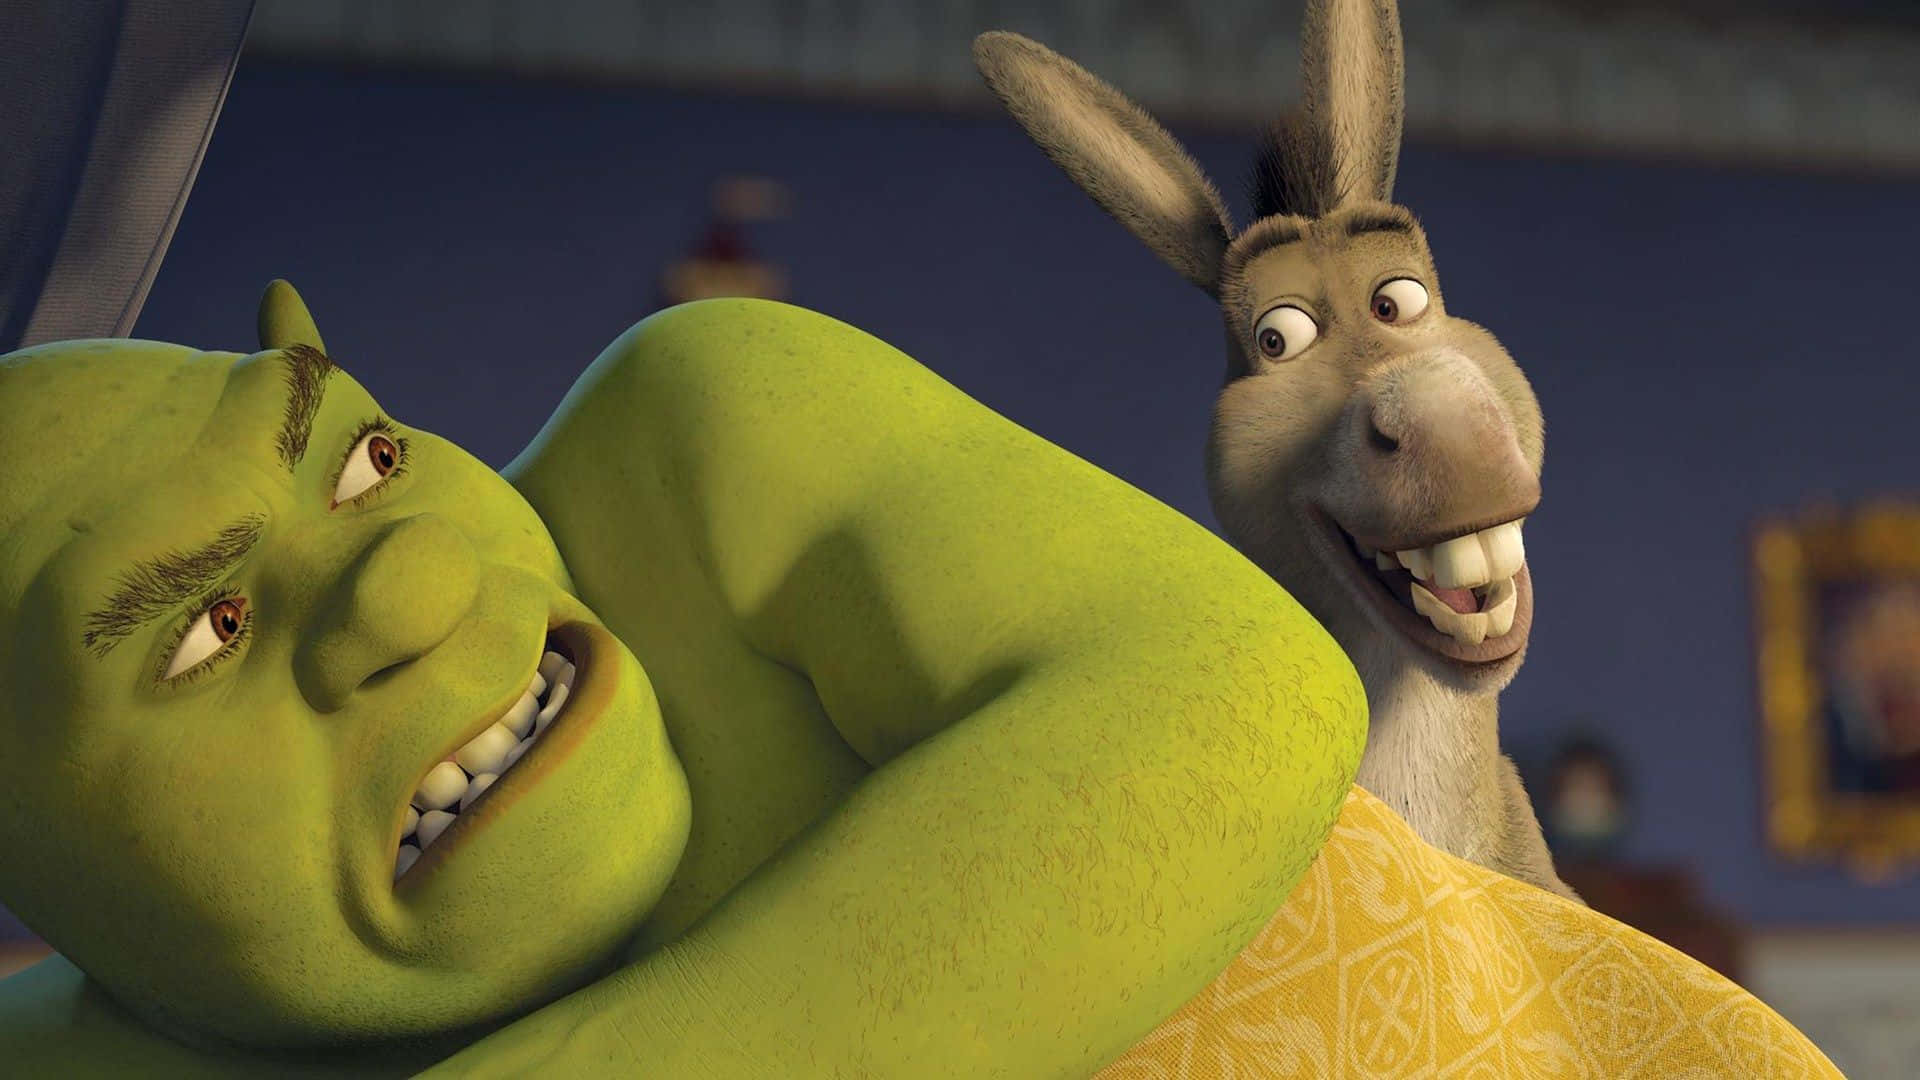 Funny Shrek In Bed Annoyed By Donkey Background